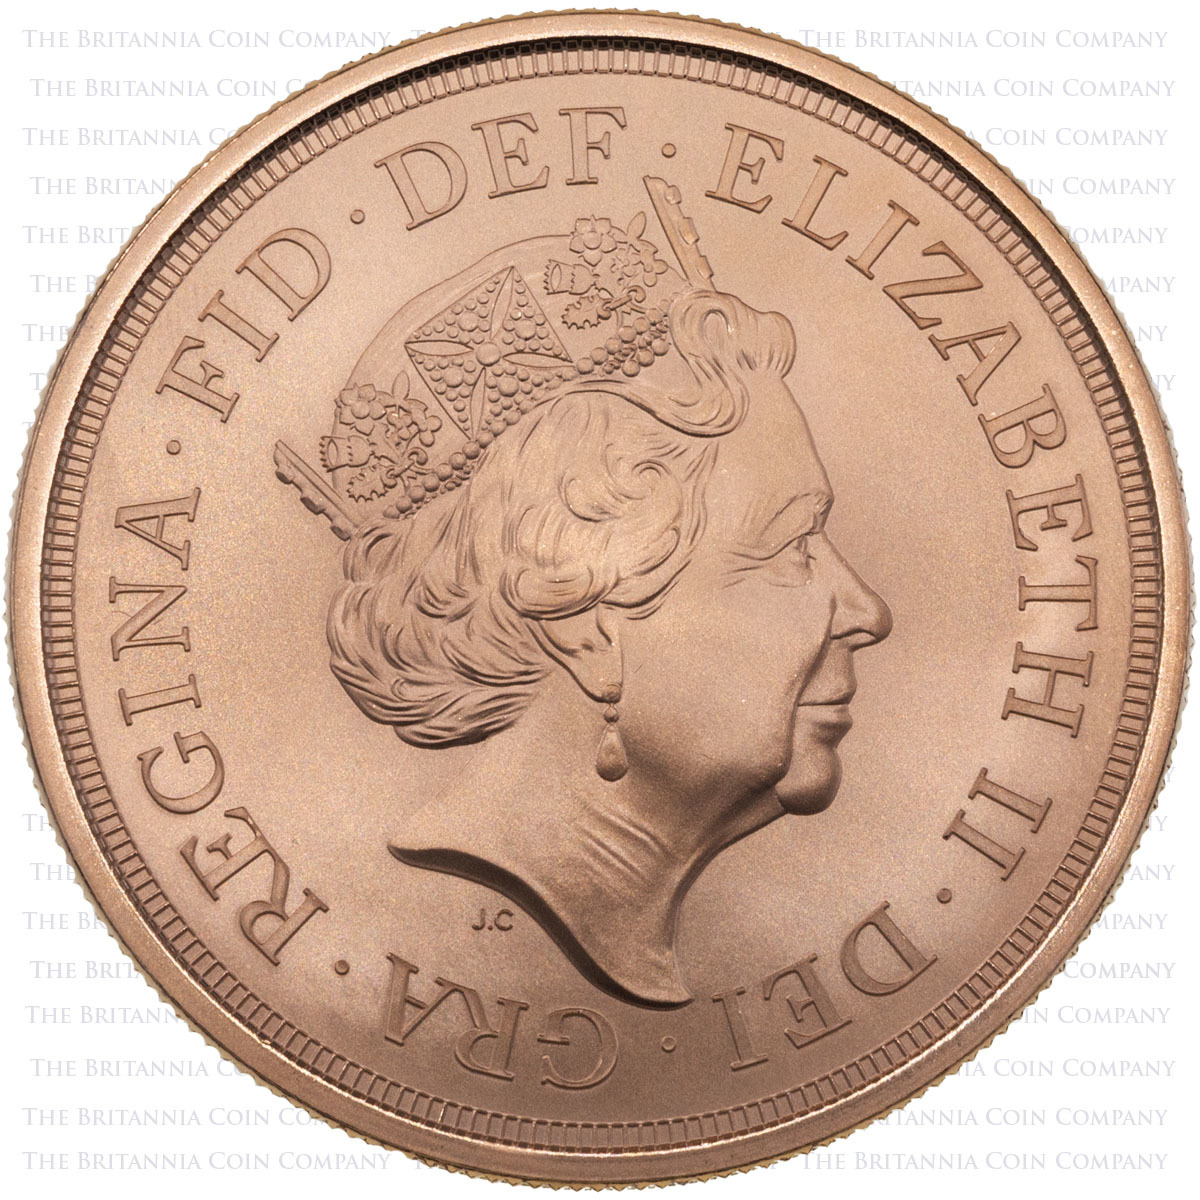 A19 2019 Gold Brilliant Uncirculated Five Pound Quintuple Sovereign Obverse